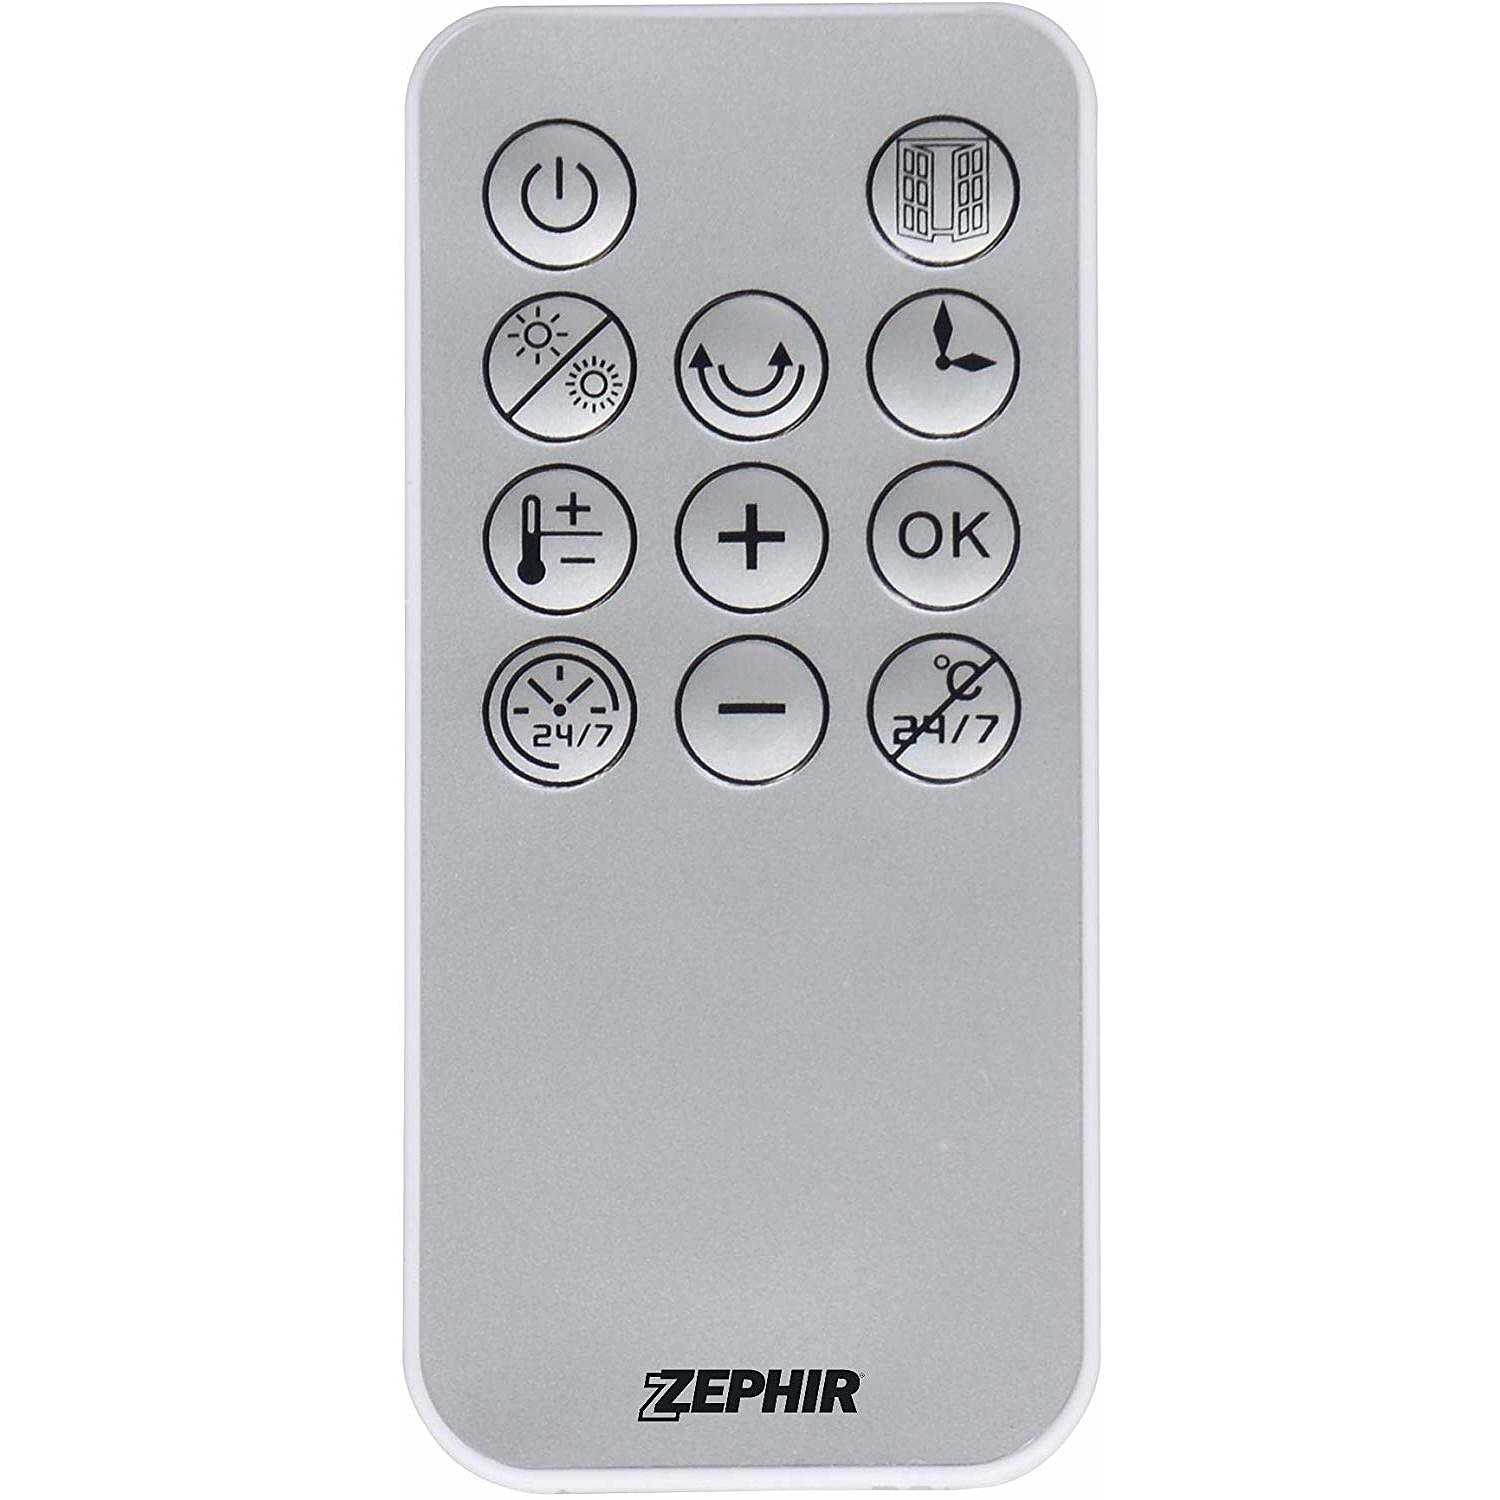 Zephir ZMW1002B termoventilatore ceramico da parete 2000 Watt